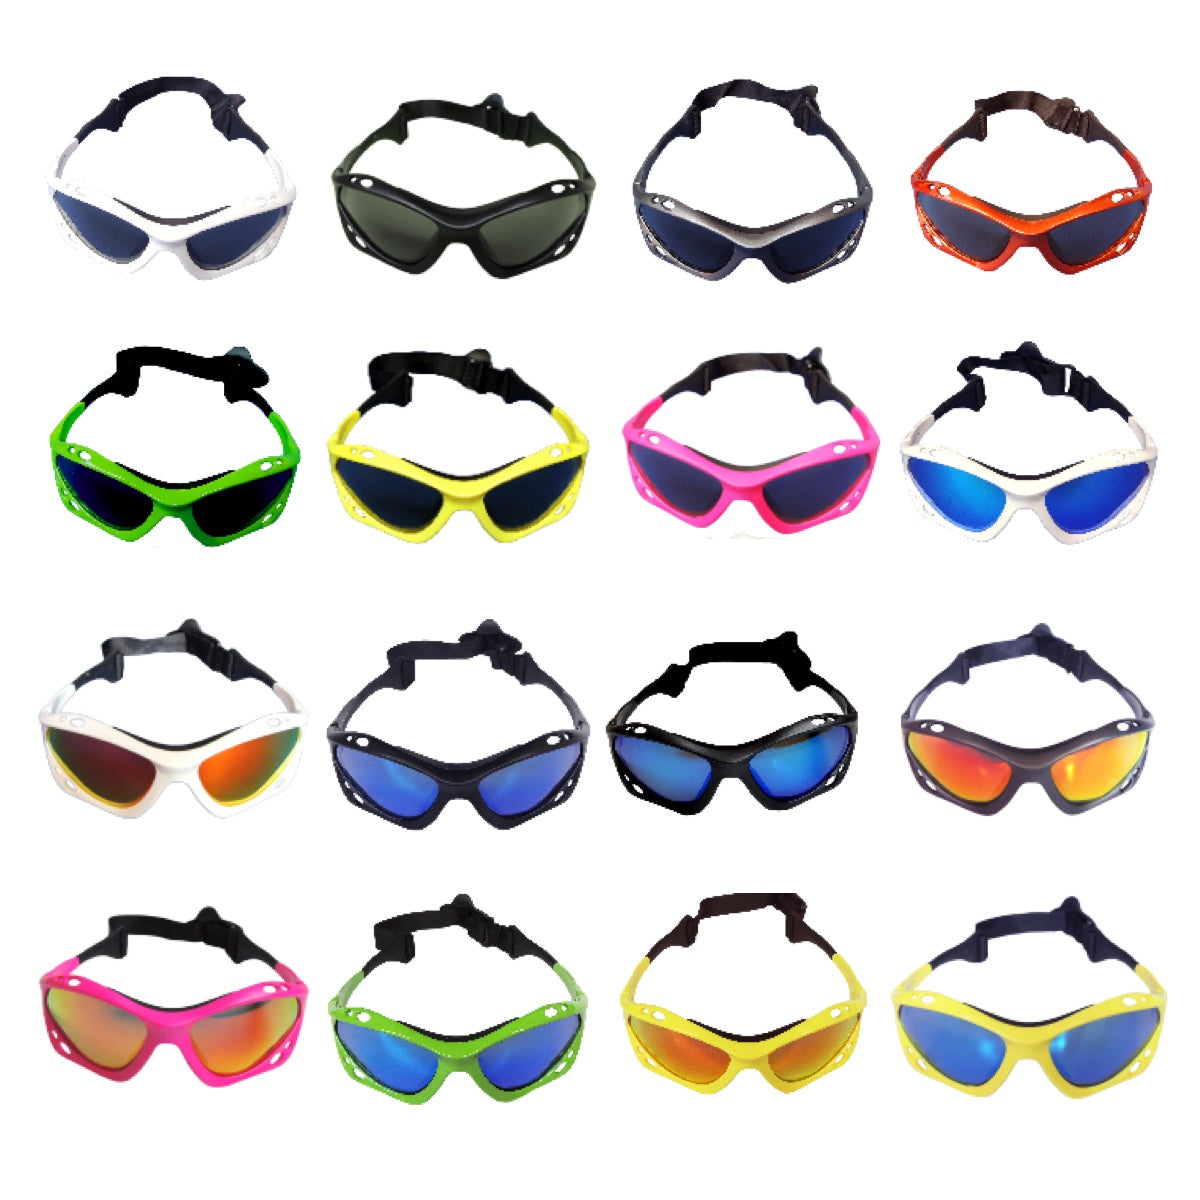 Green Hat Kiteboarding Sunglasses | Kitesurfing | Surfing Pink w/ Orange Reflective Lens